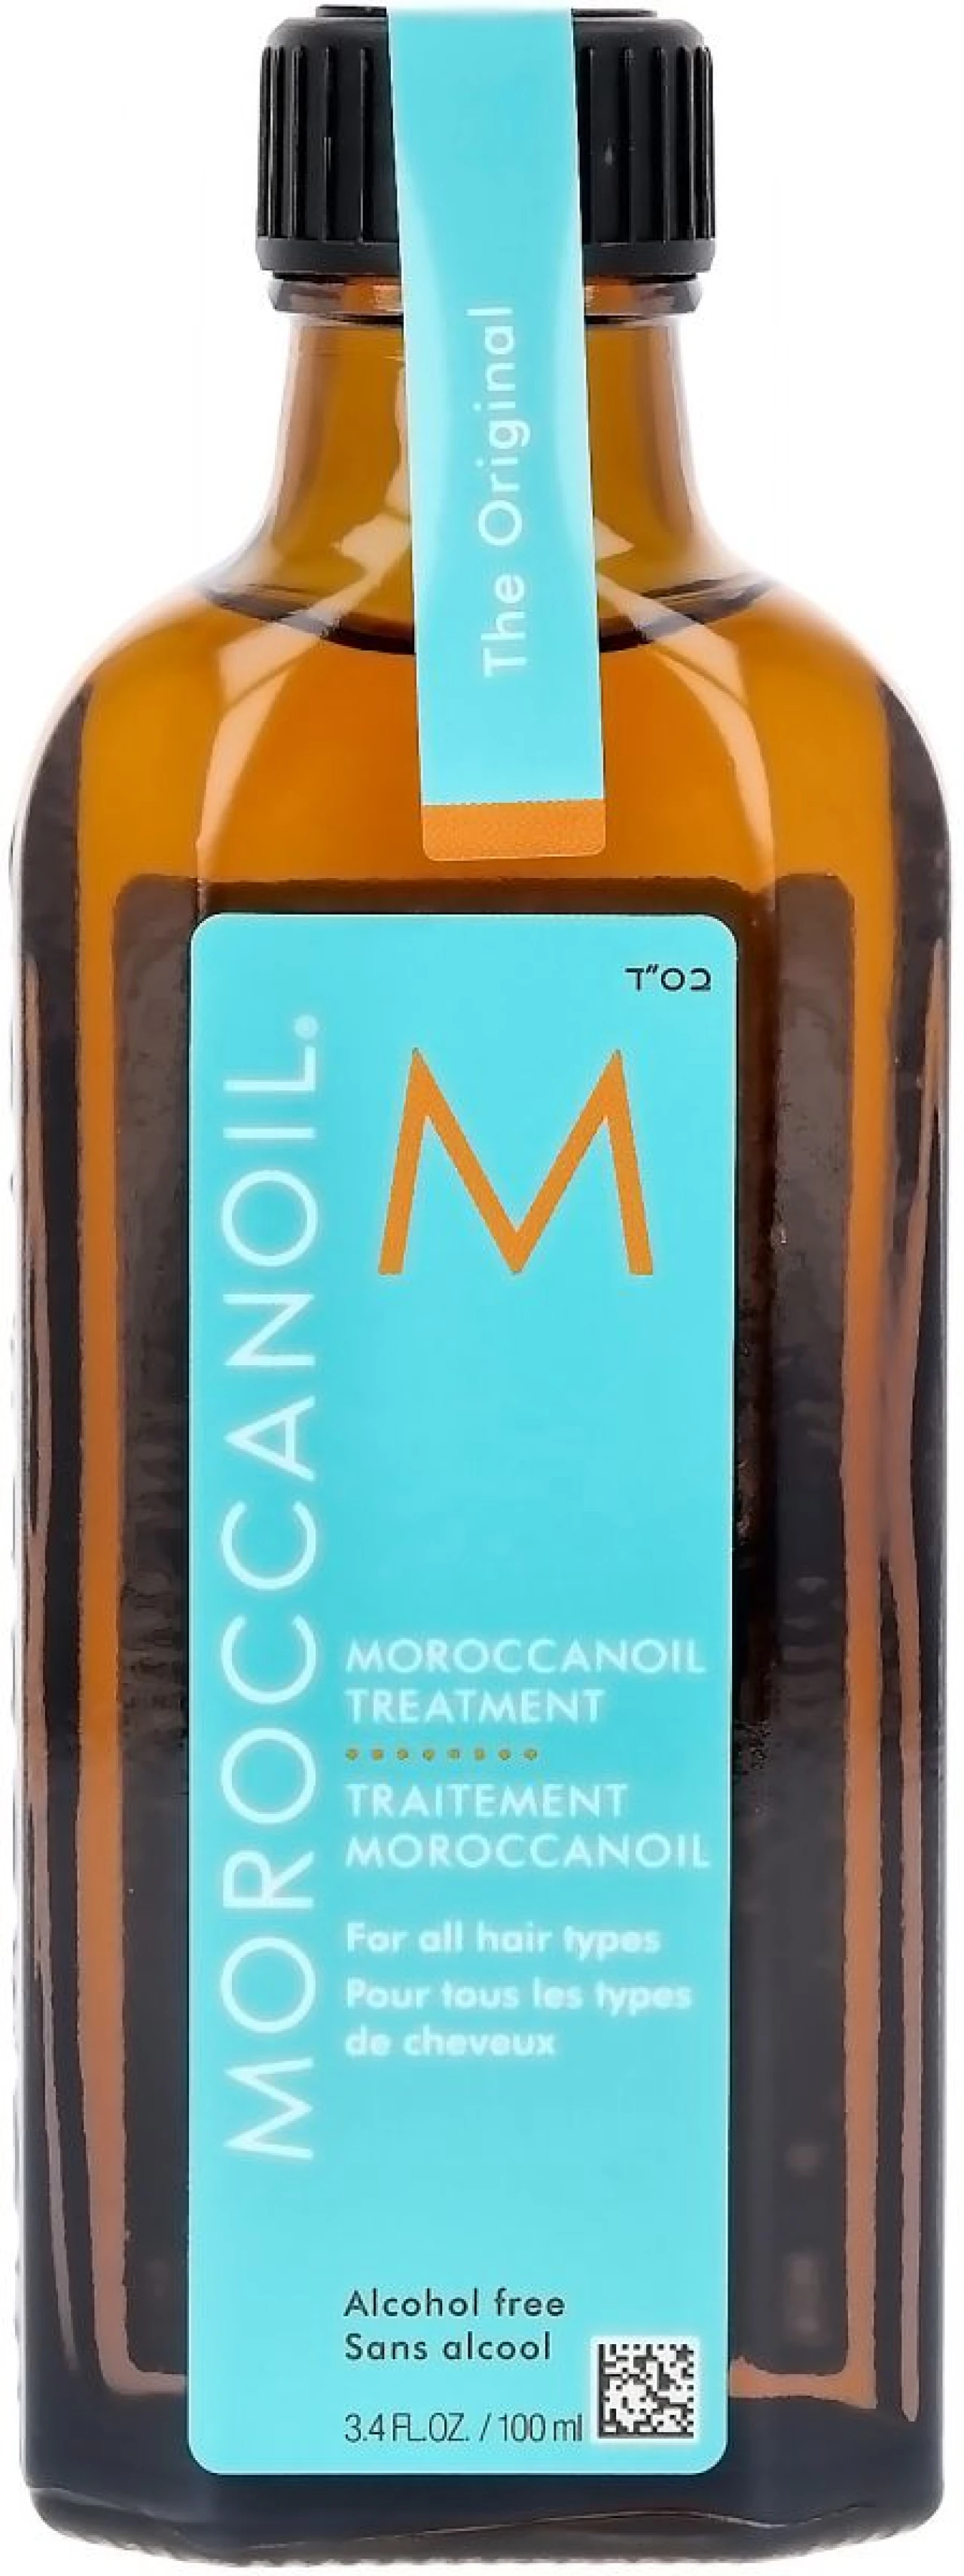 Moroccanoil Original Oil Treatment